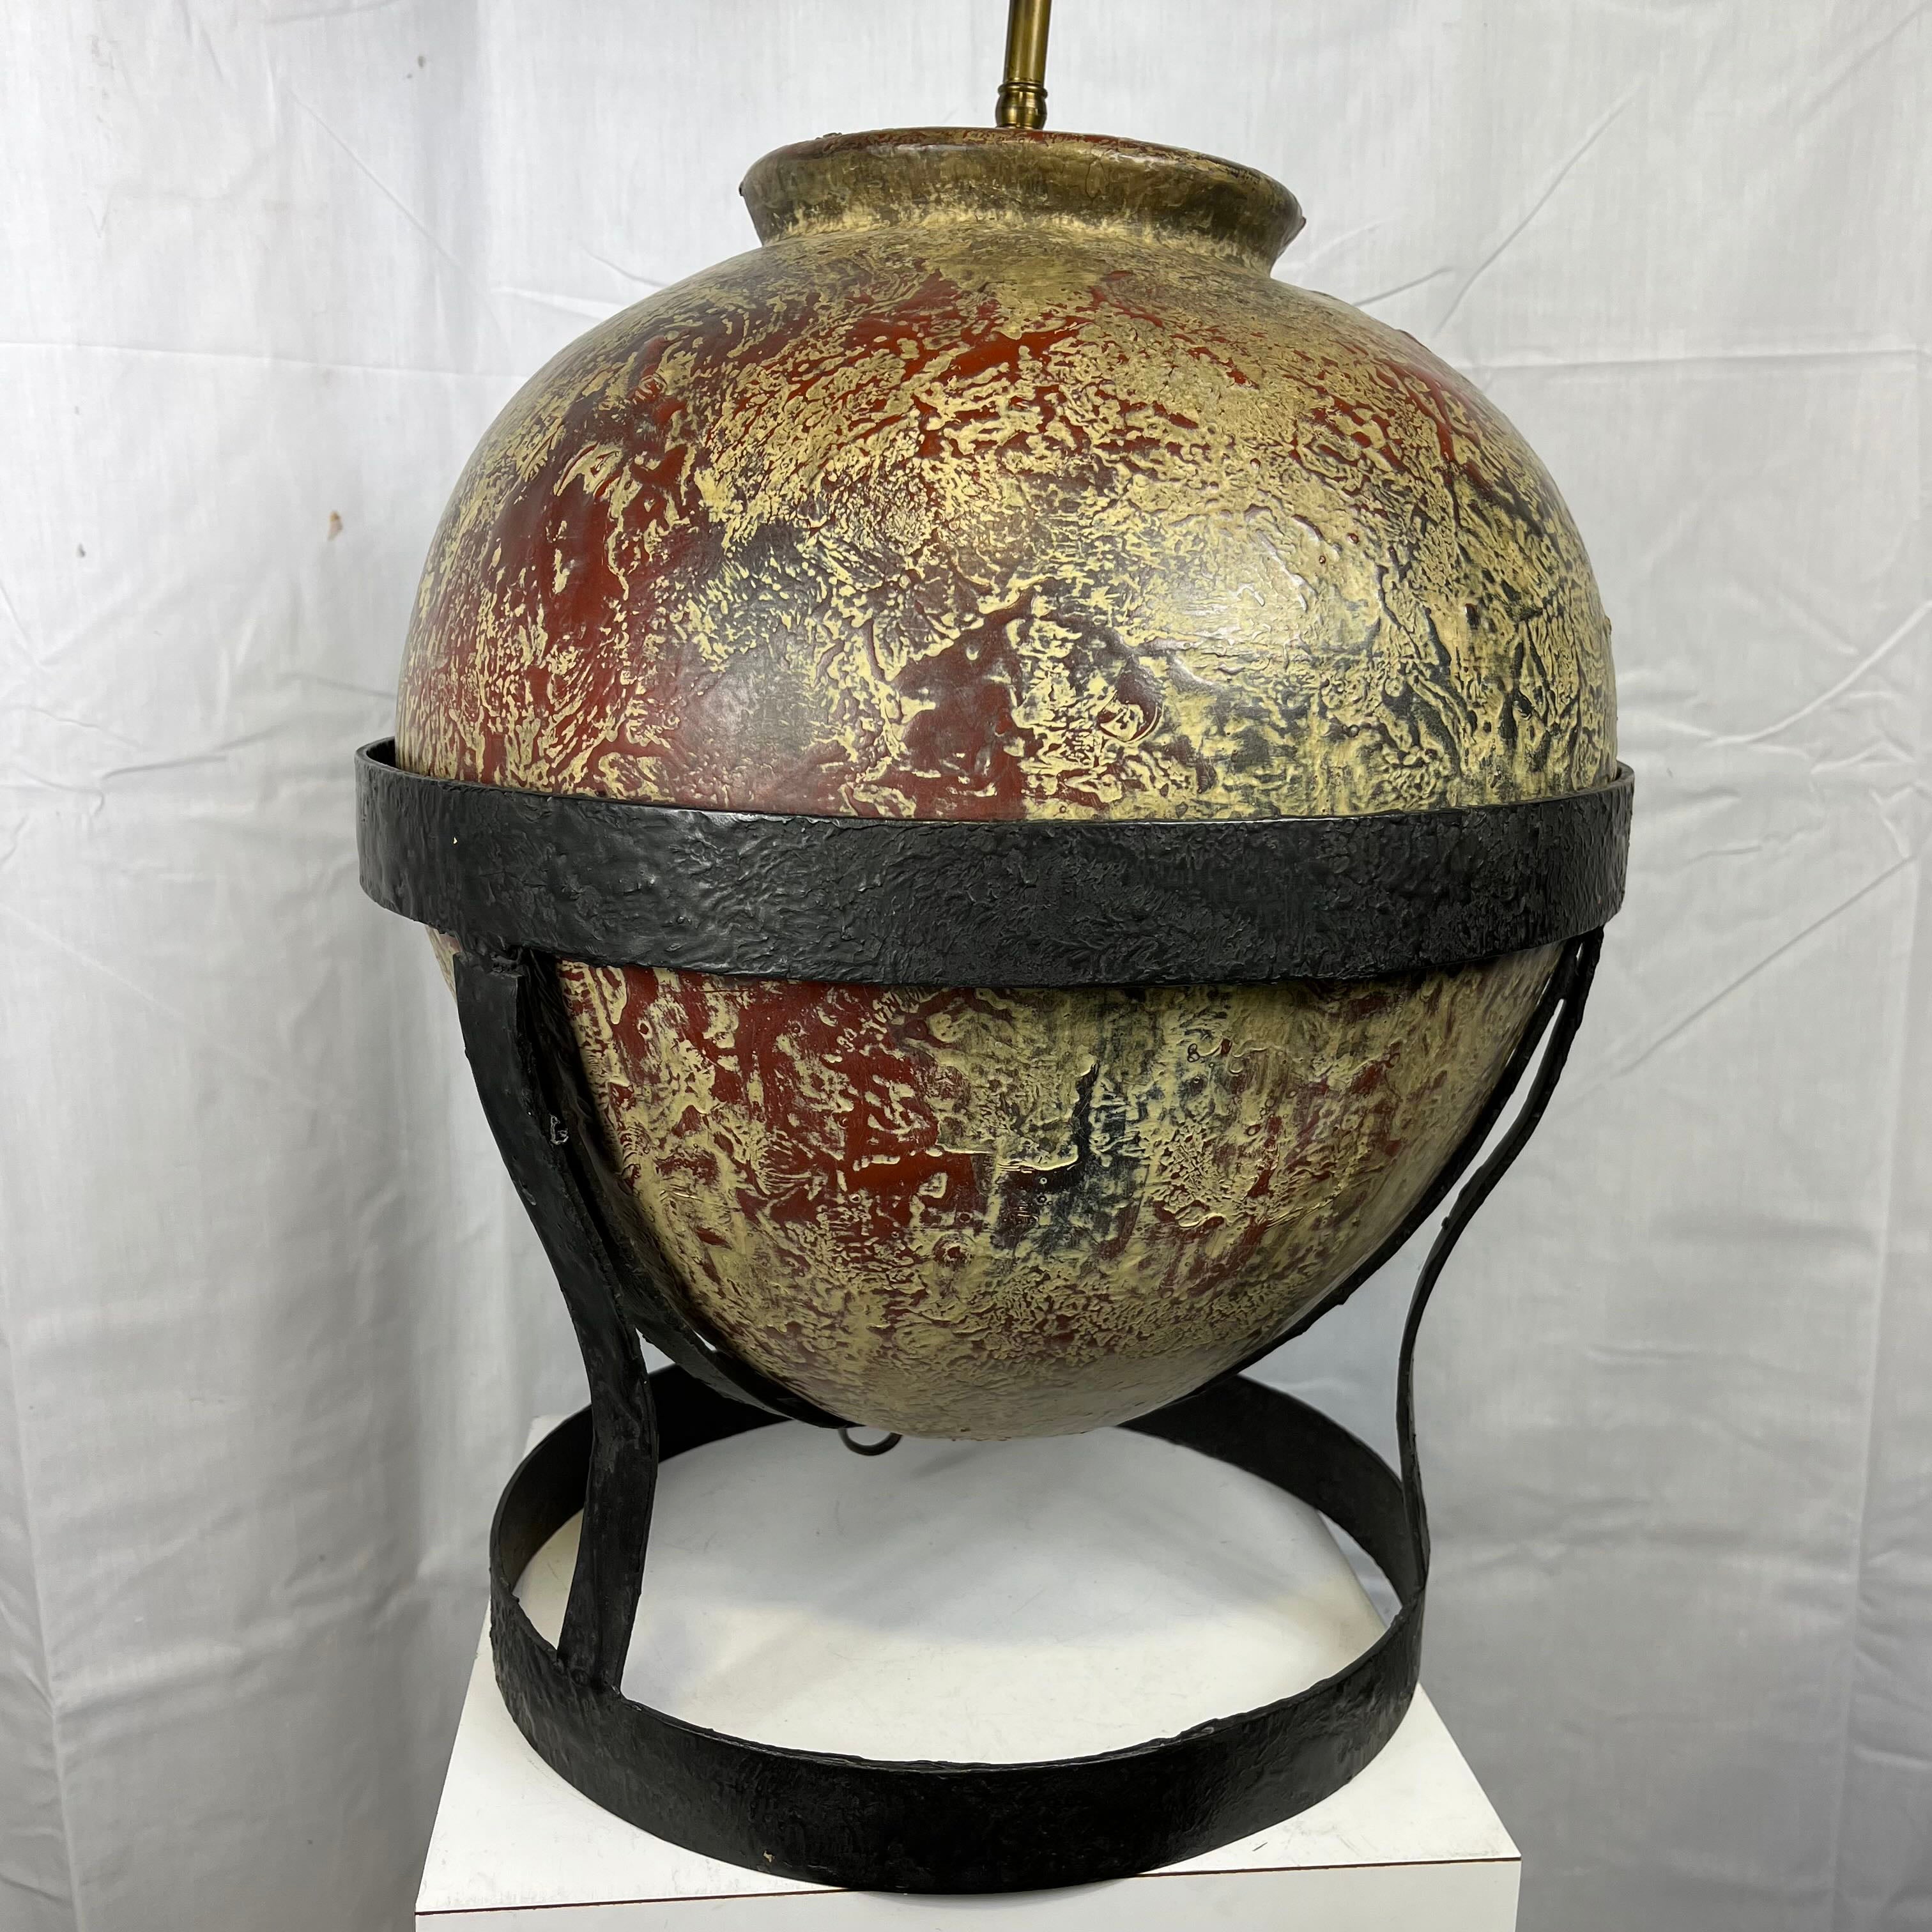 15" Diameter x 29" Beige Black & Red Ceramic Round on Iron Stand 2 Light Table Lamp